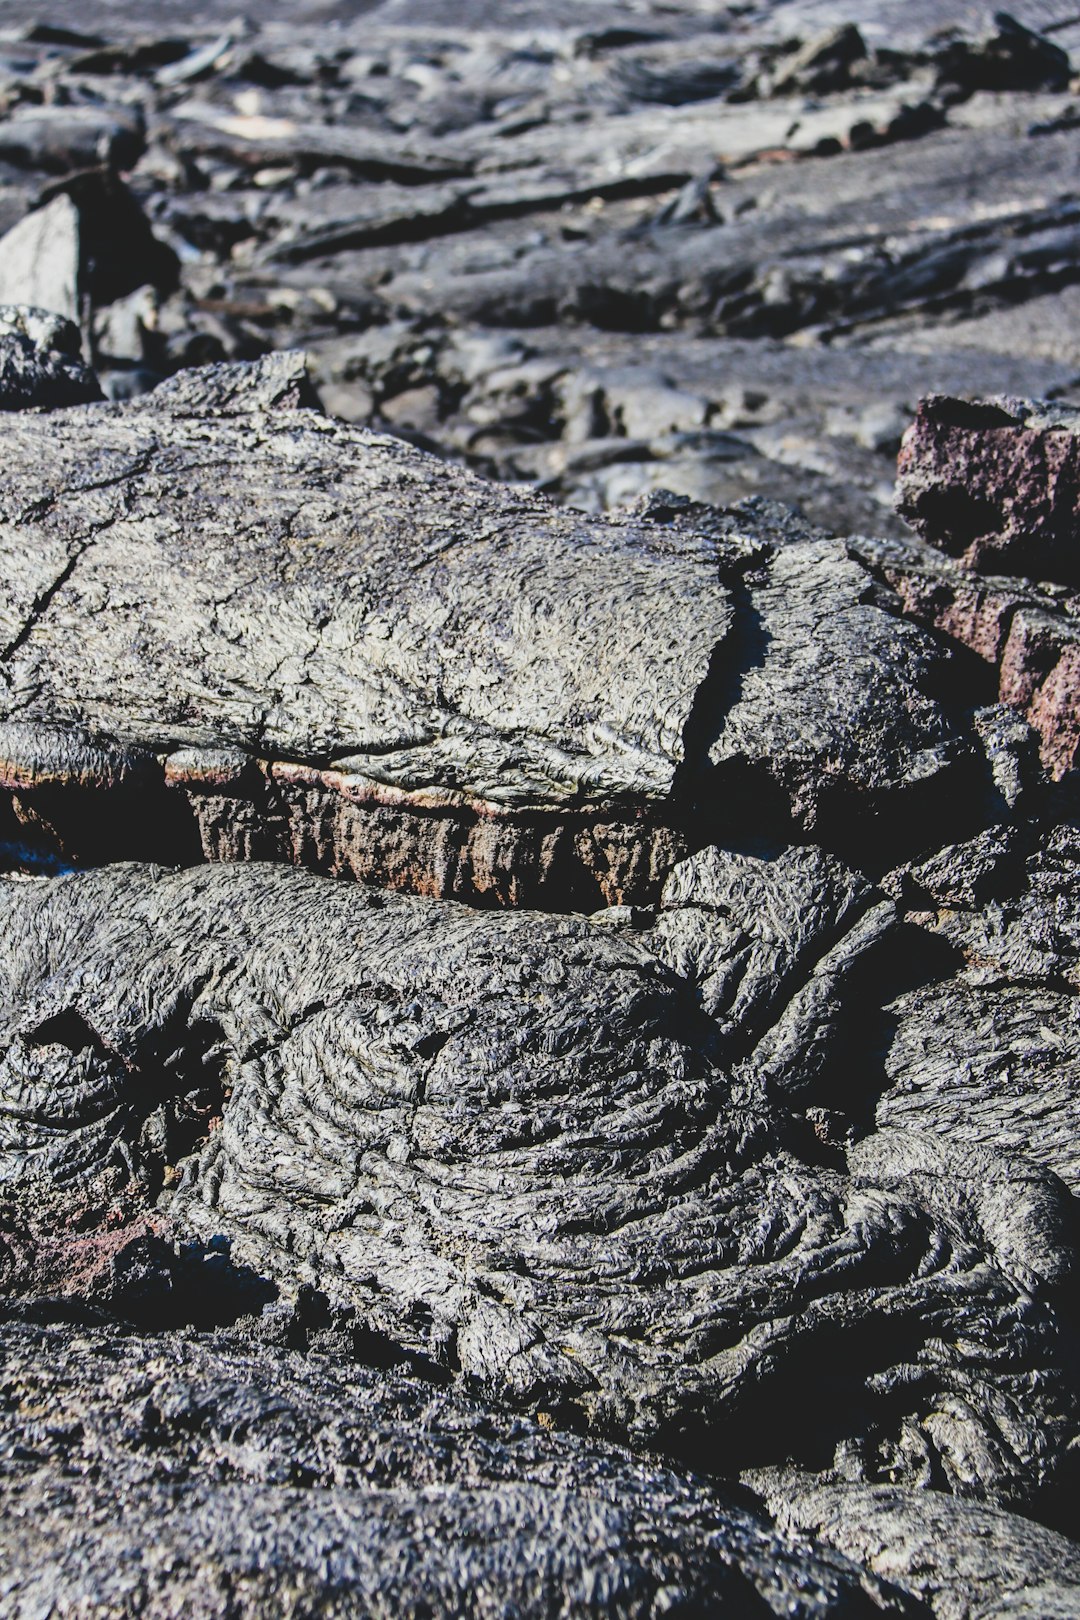 brown and black snake on brown rock